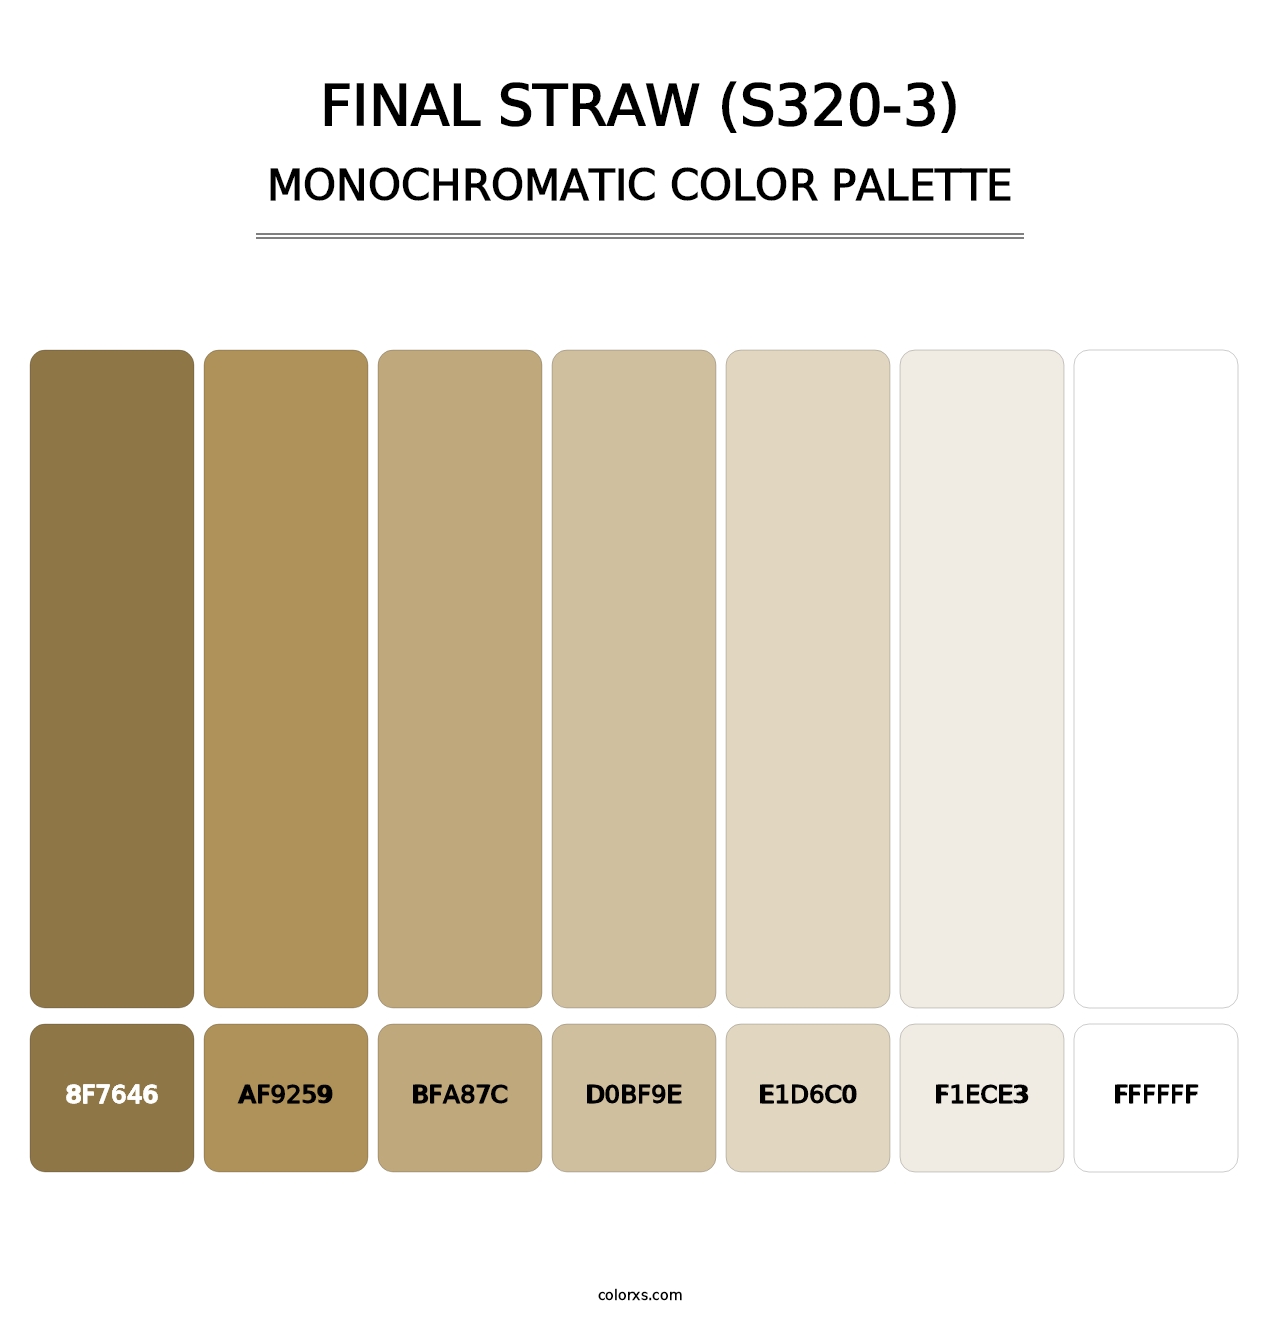 Final Straw (S320-3) - Monochromatic Color Palette